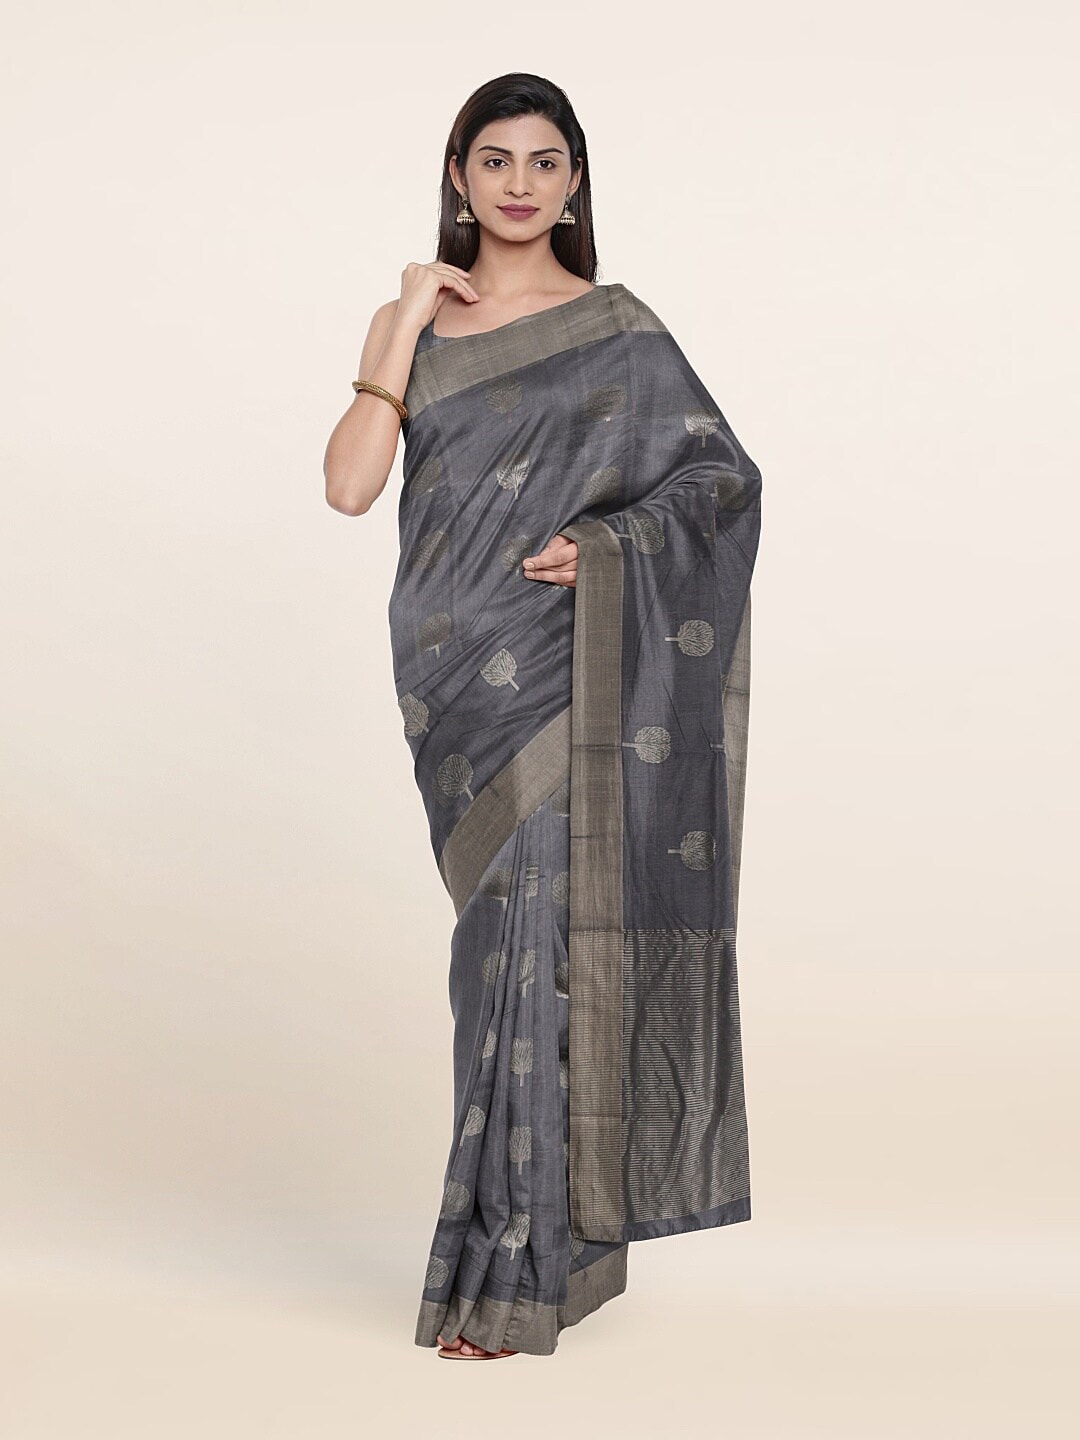 Pothys Grey & Gold-Toned Woven Design Zari Silk Cotton Saree Price in India